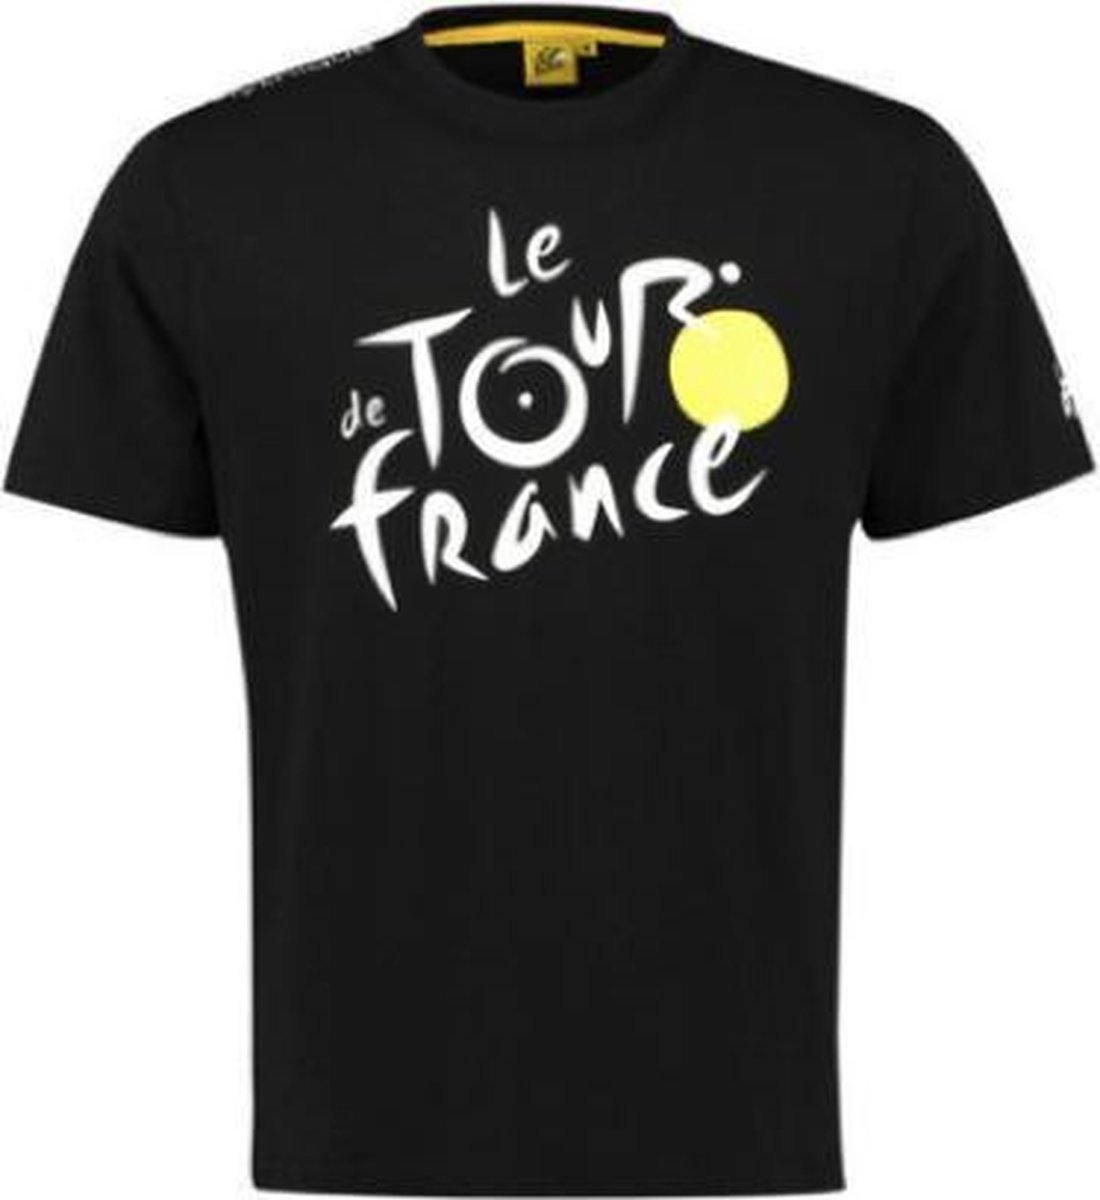 Tour de France - Officiële T-shirt - Zwart - Maat 10/12 Jaar